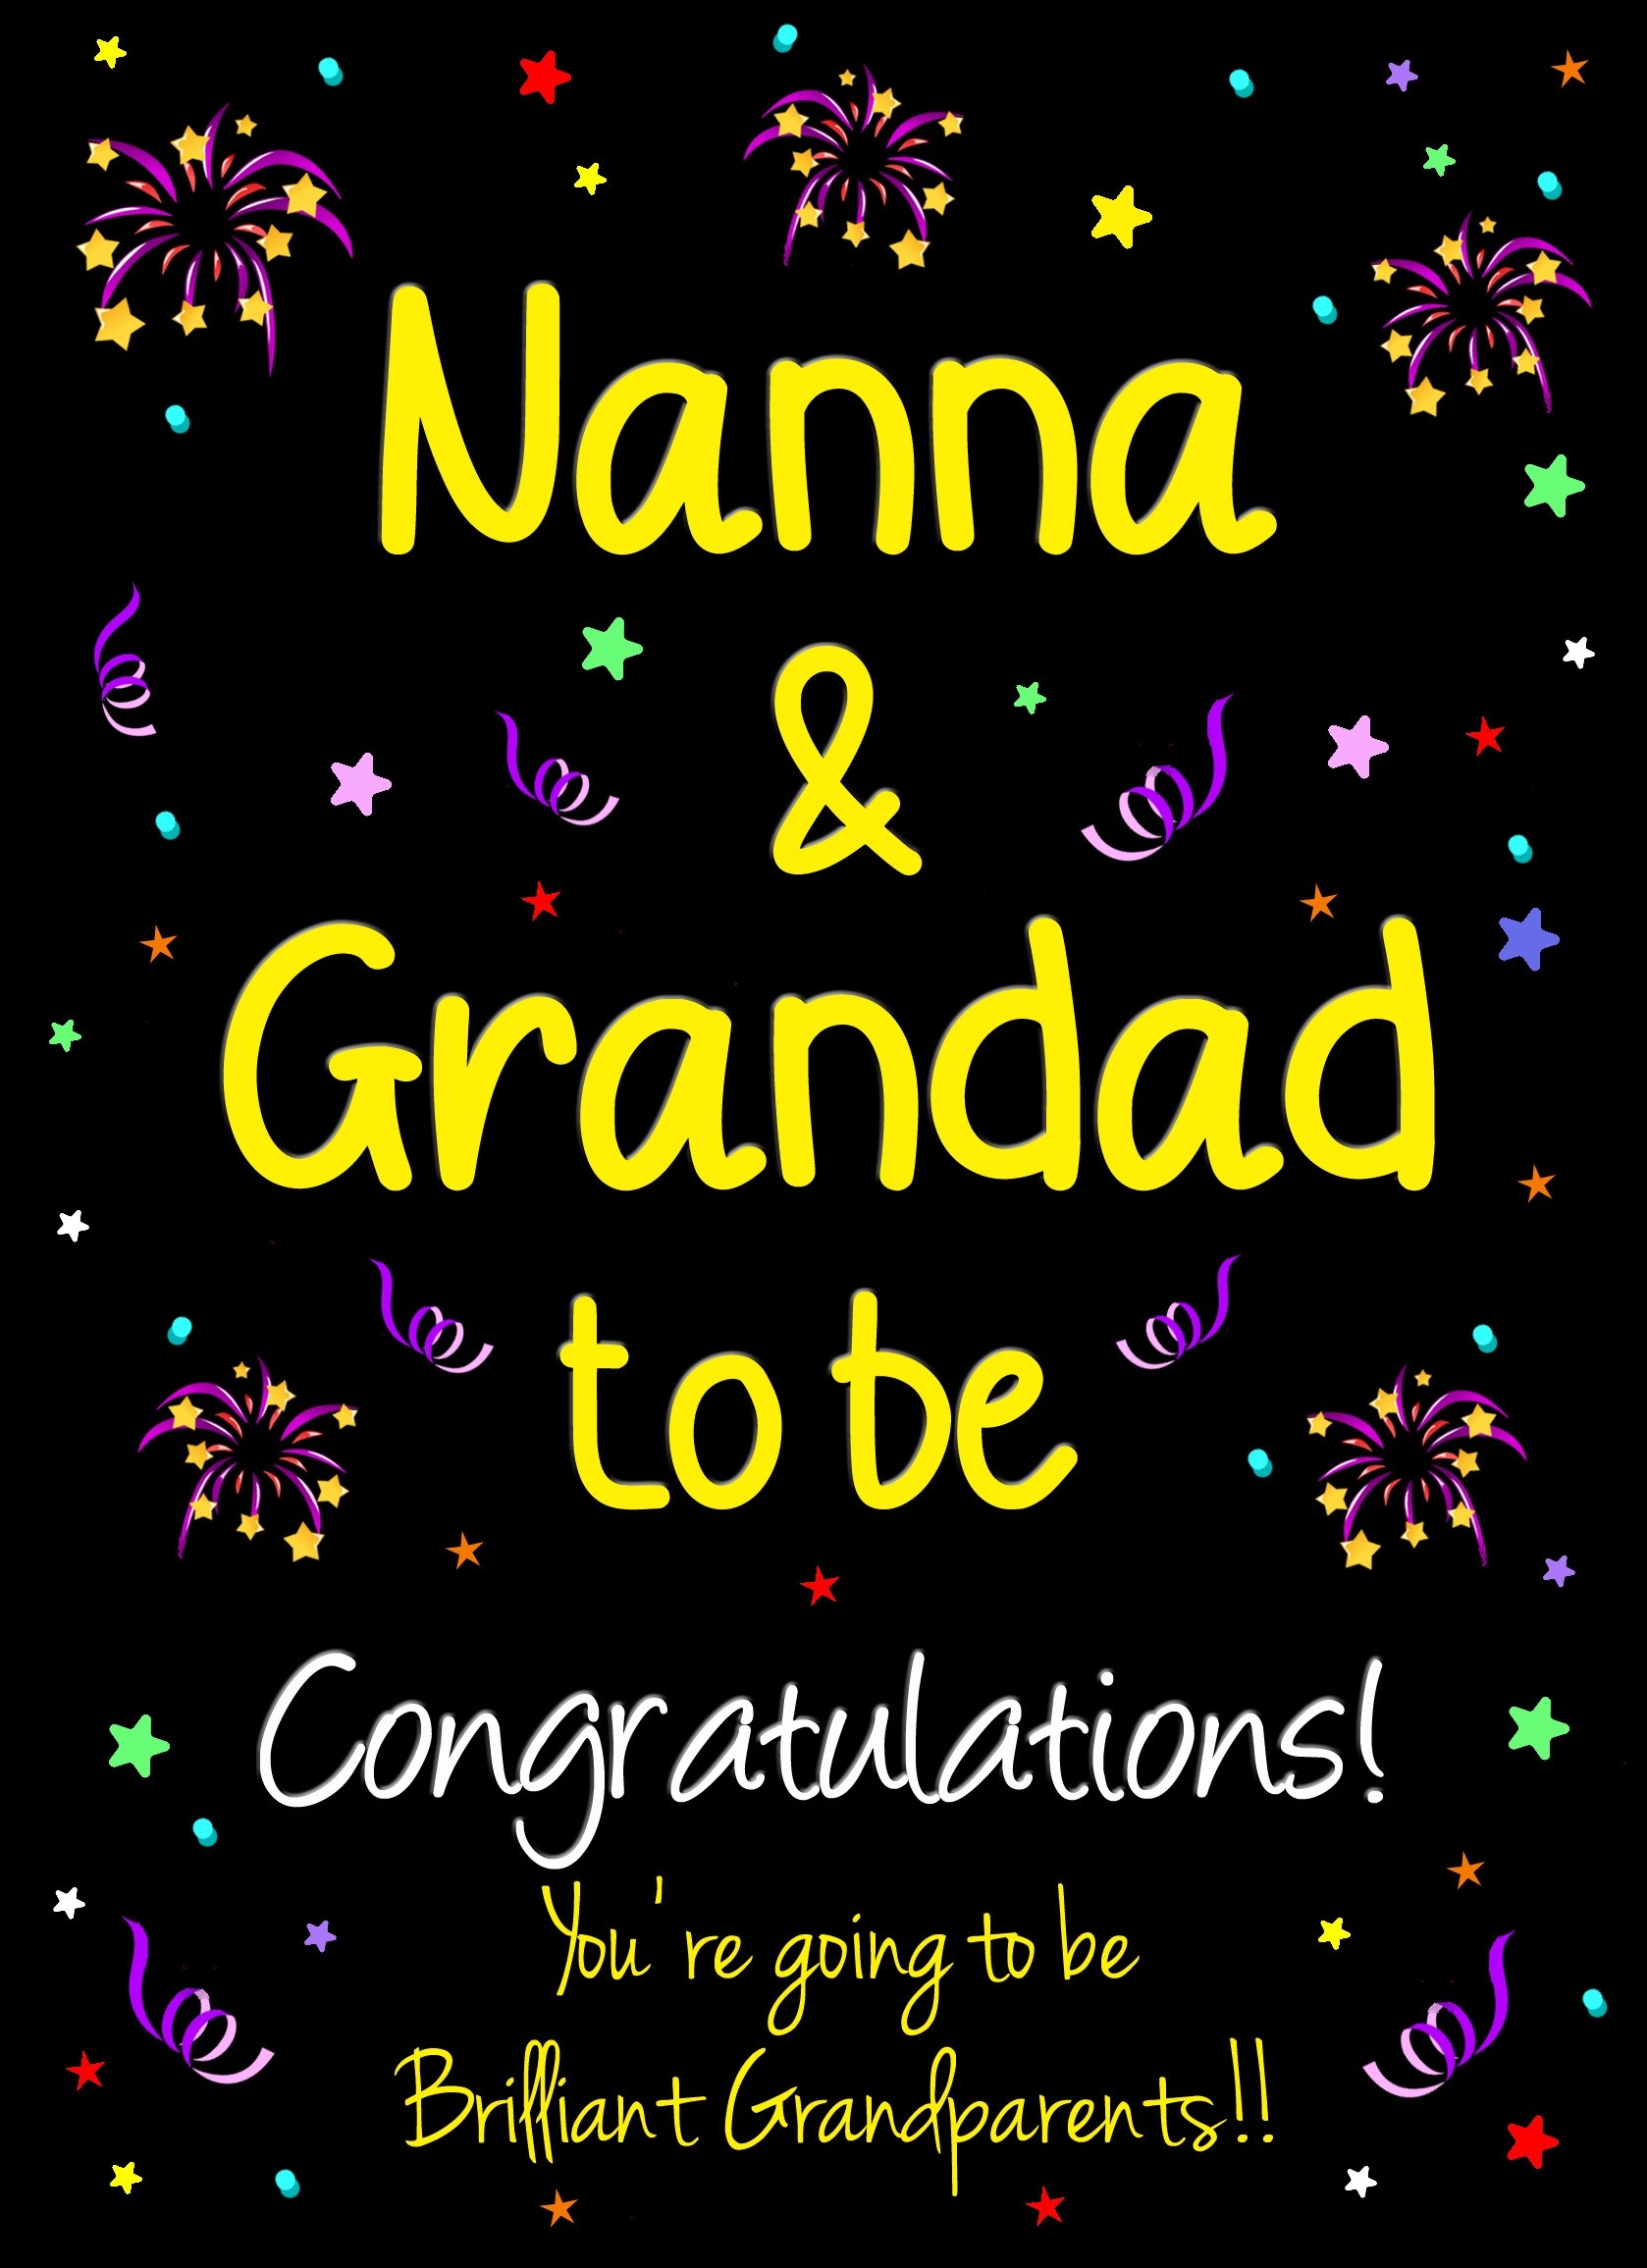 Nanna and Grandad to be Baby Pregnancy Congratulations Card 